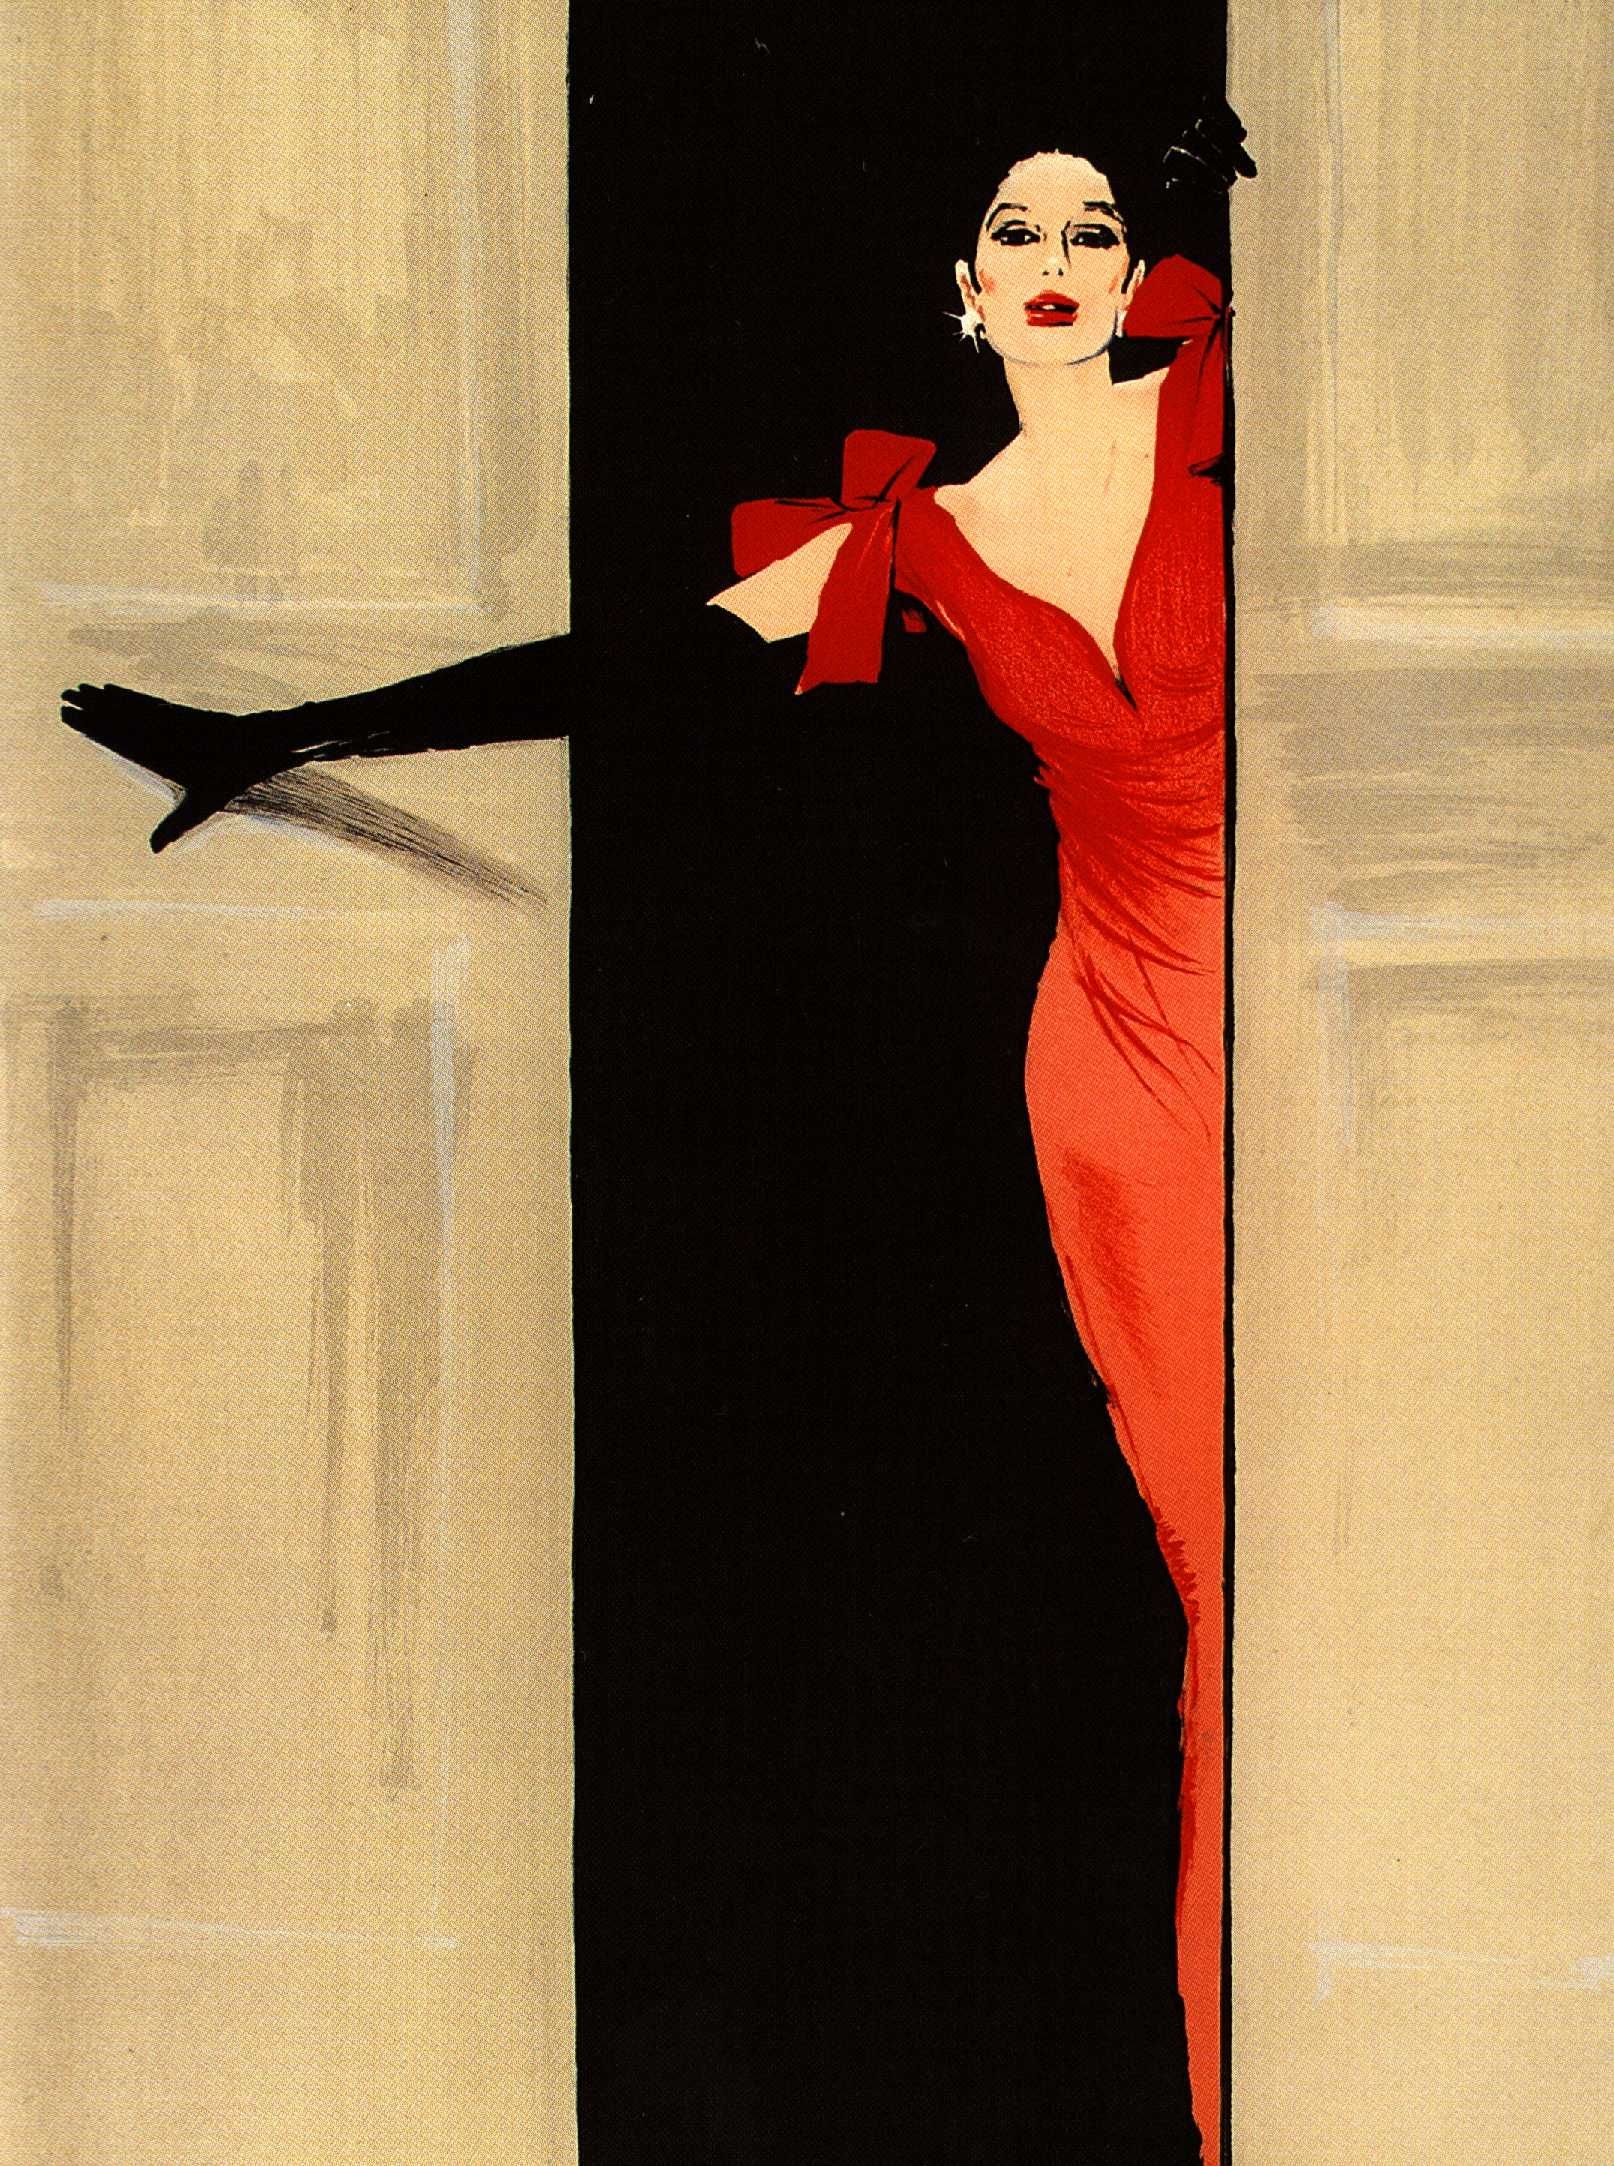 Lady in Doorway Wearing Red Dress by René Gruau